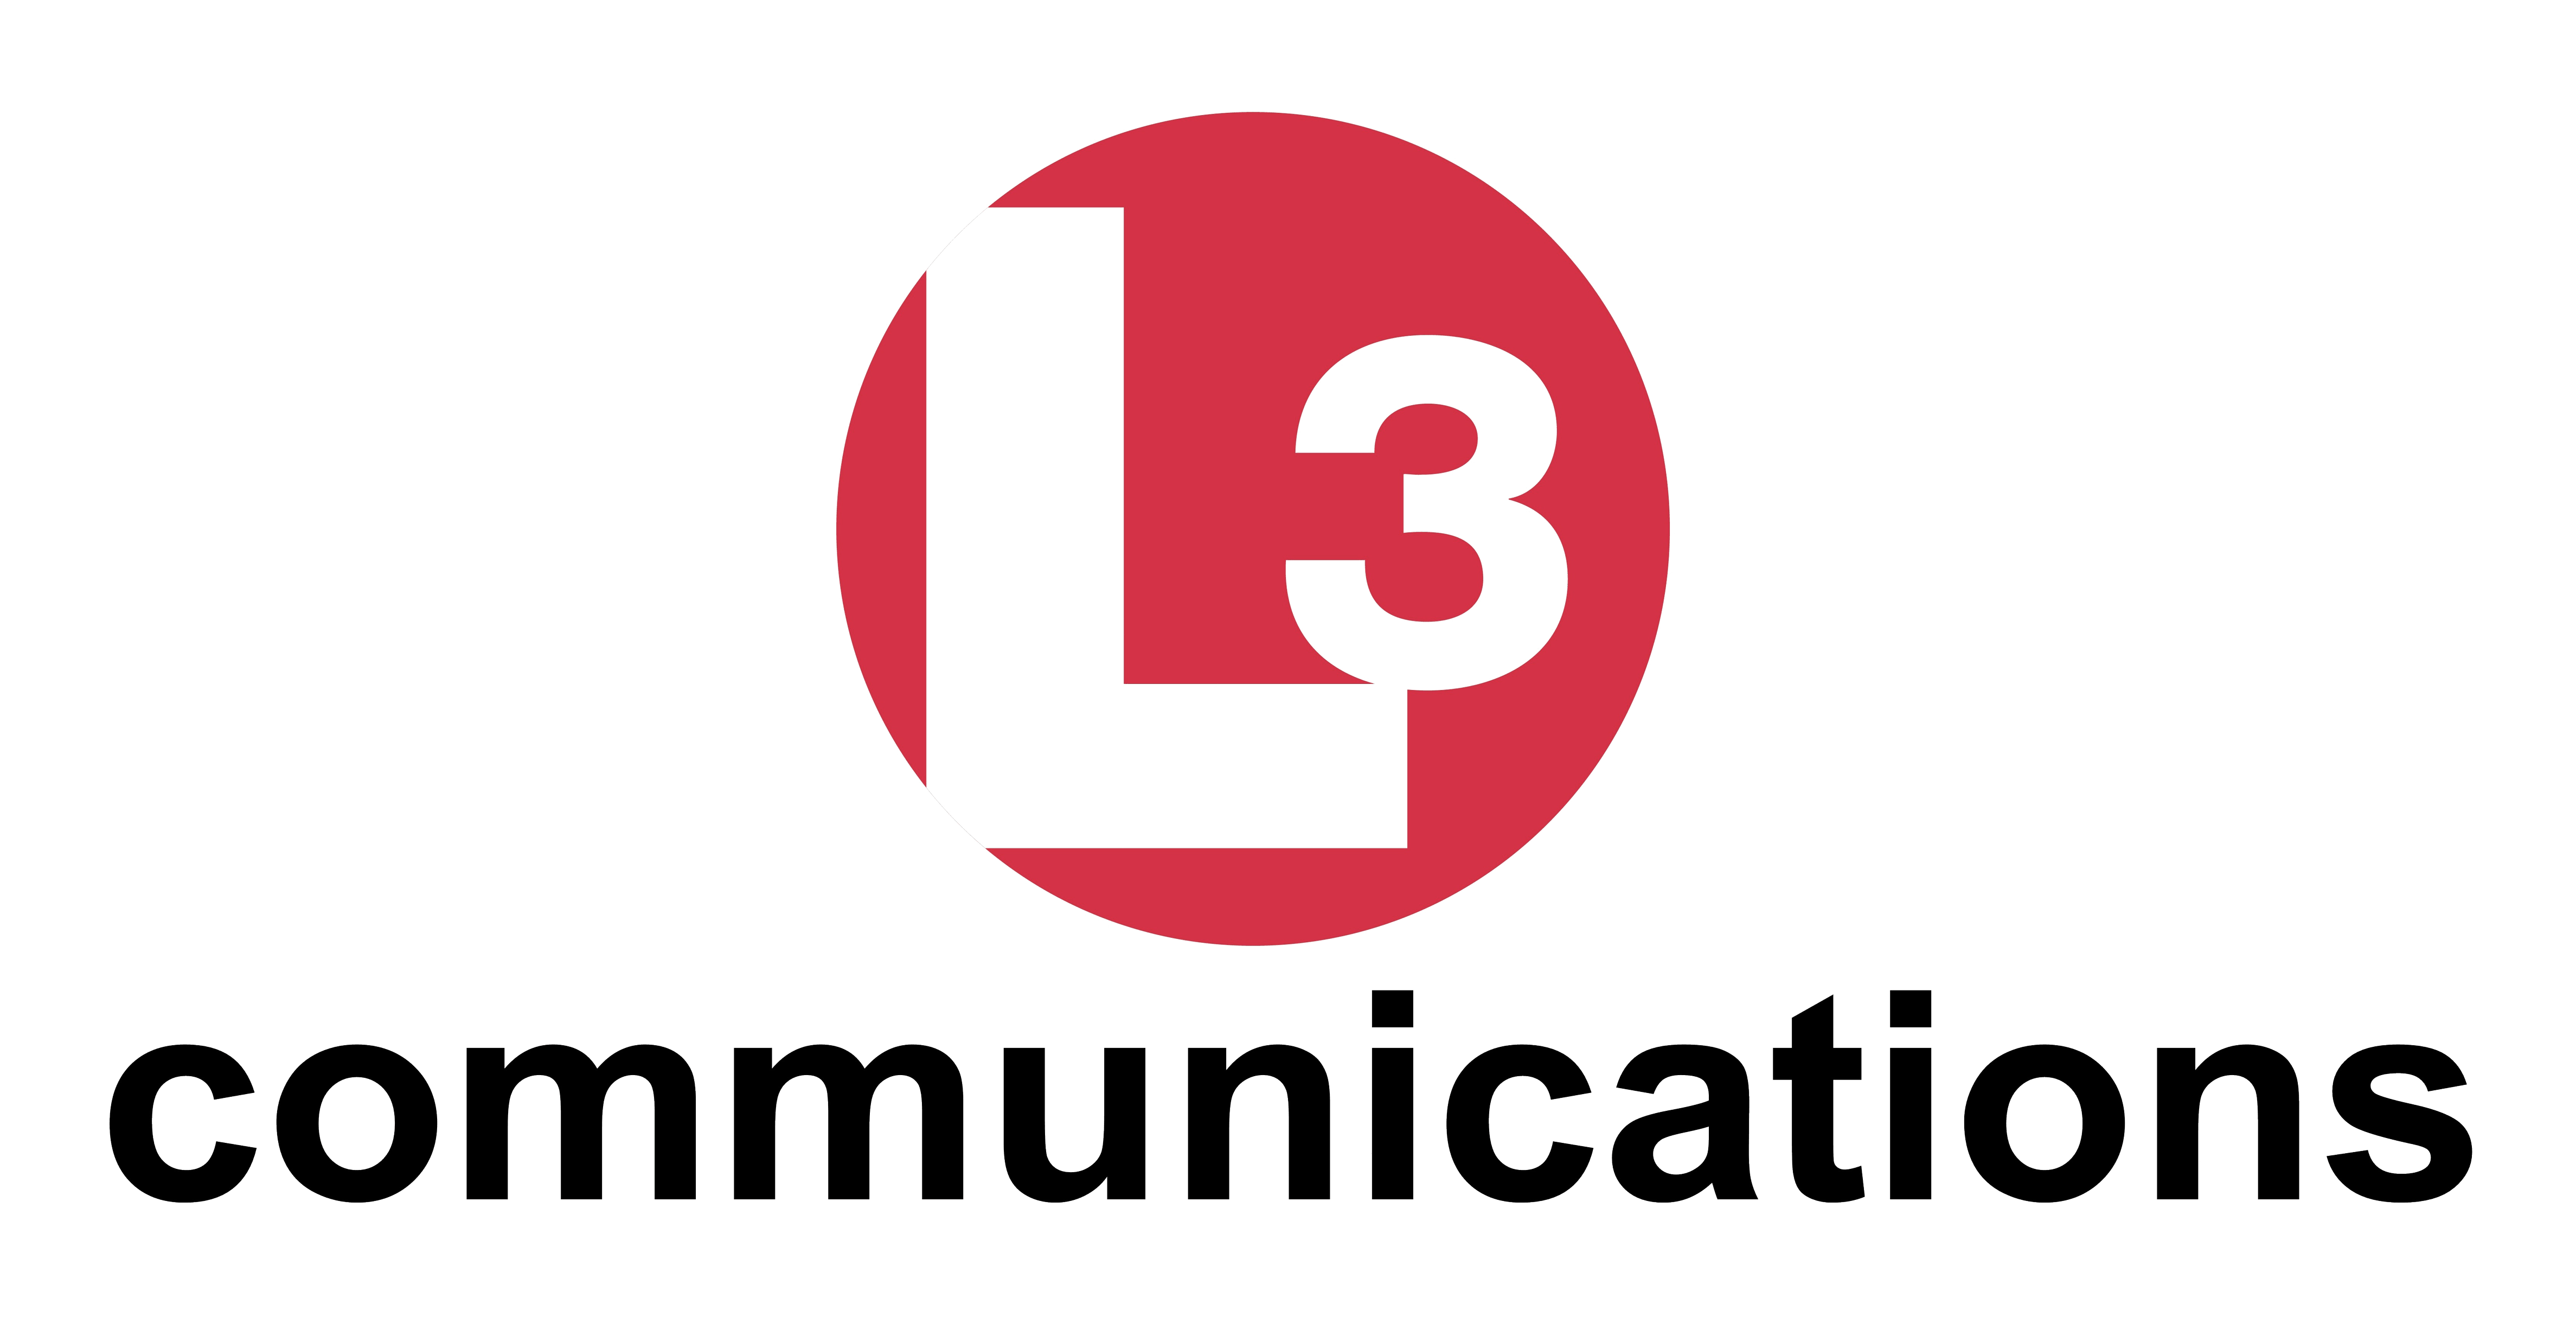 L-3 Communications Logo - L 3 Communications Logo PNG Image - PurePNG | Free transparent CC0 ...